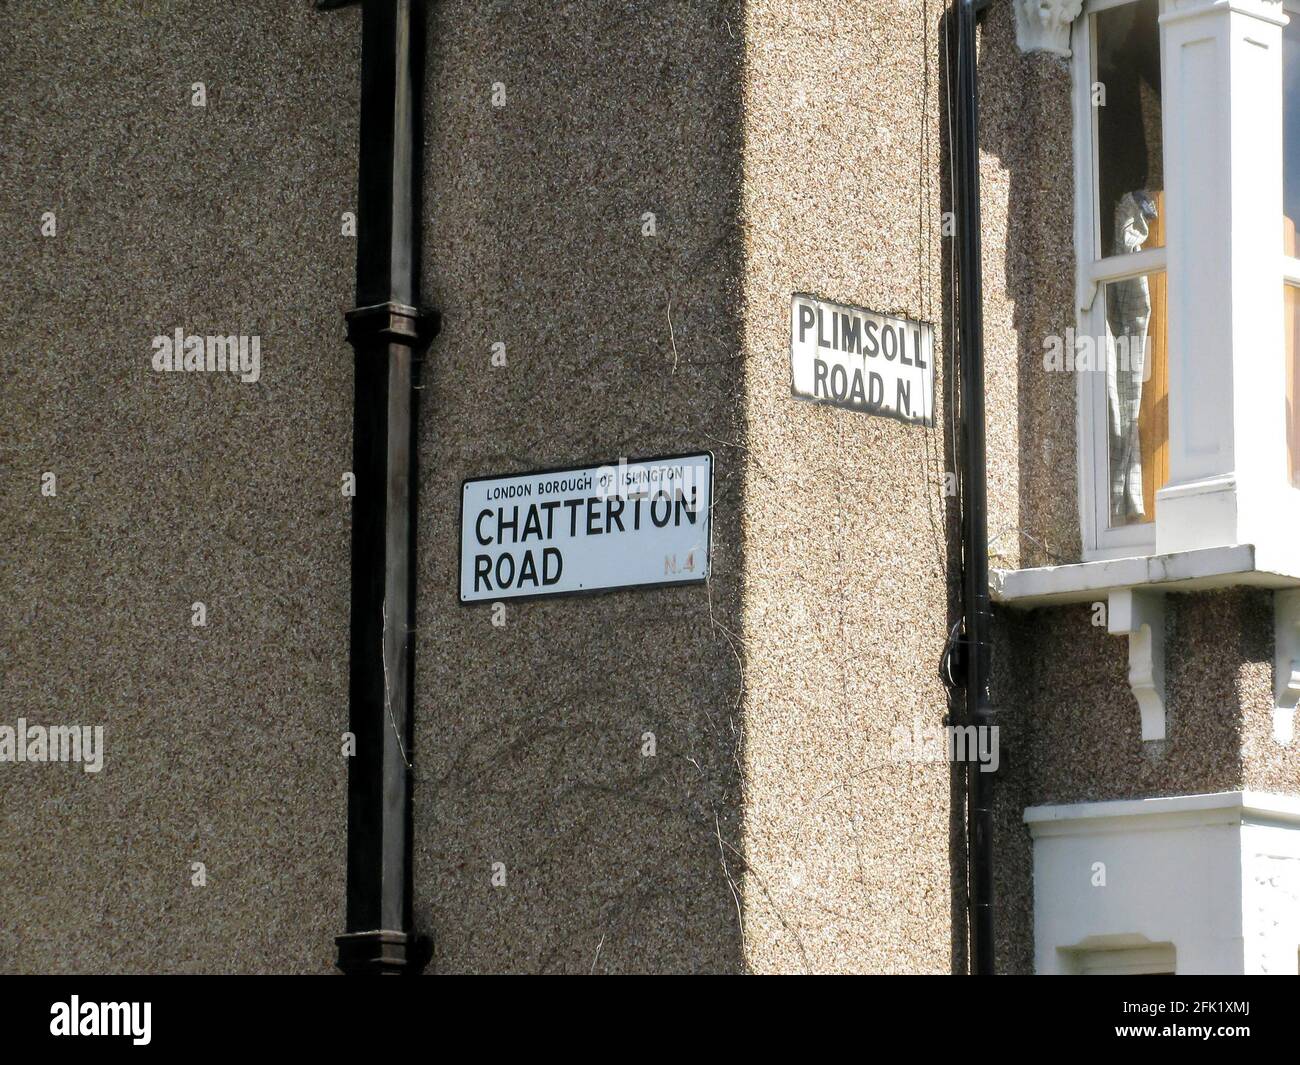 Indicazioni stradali per Chatterton Road e Plimsoll Road, Highbury, London Borough of Islington, London N4, UK dal 2012 Foto Stock